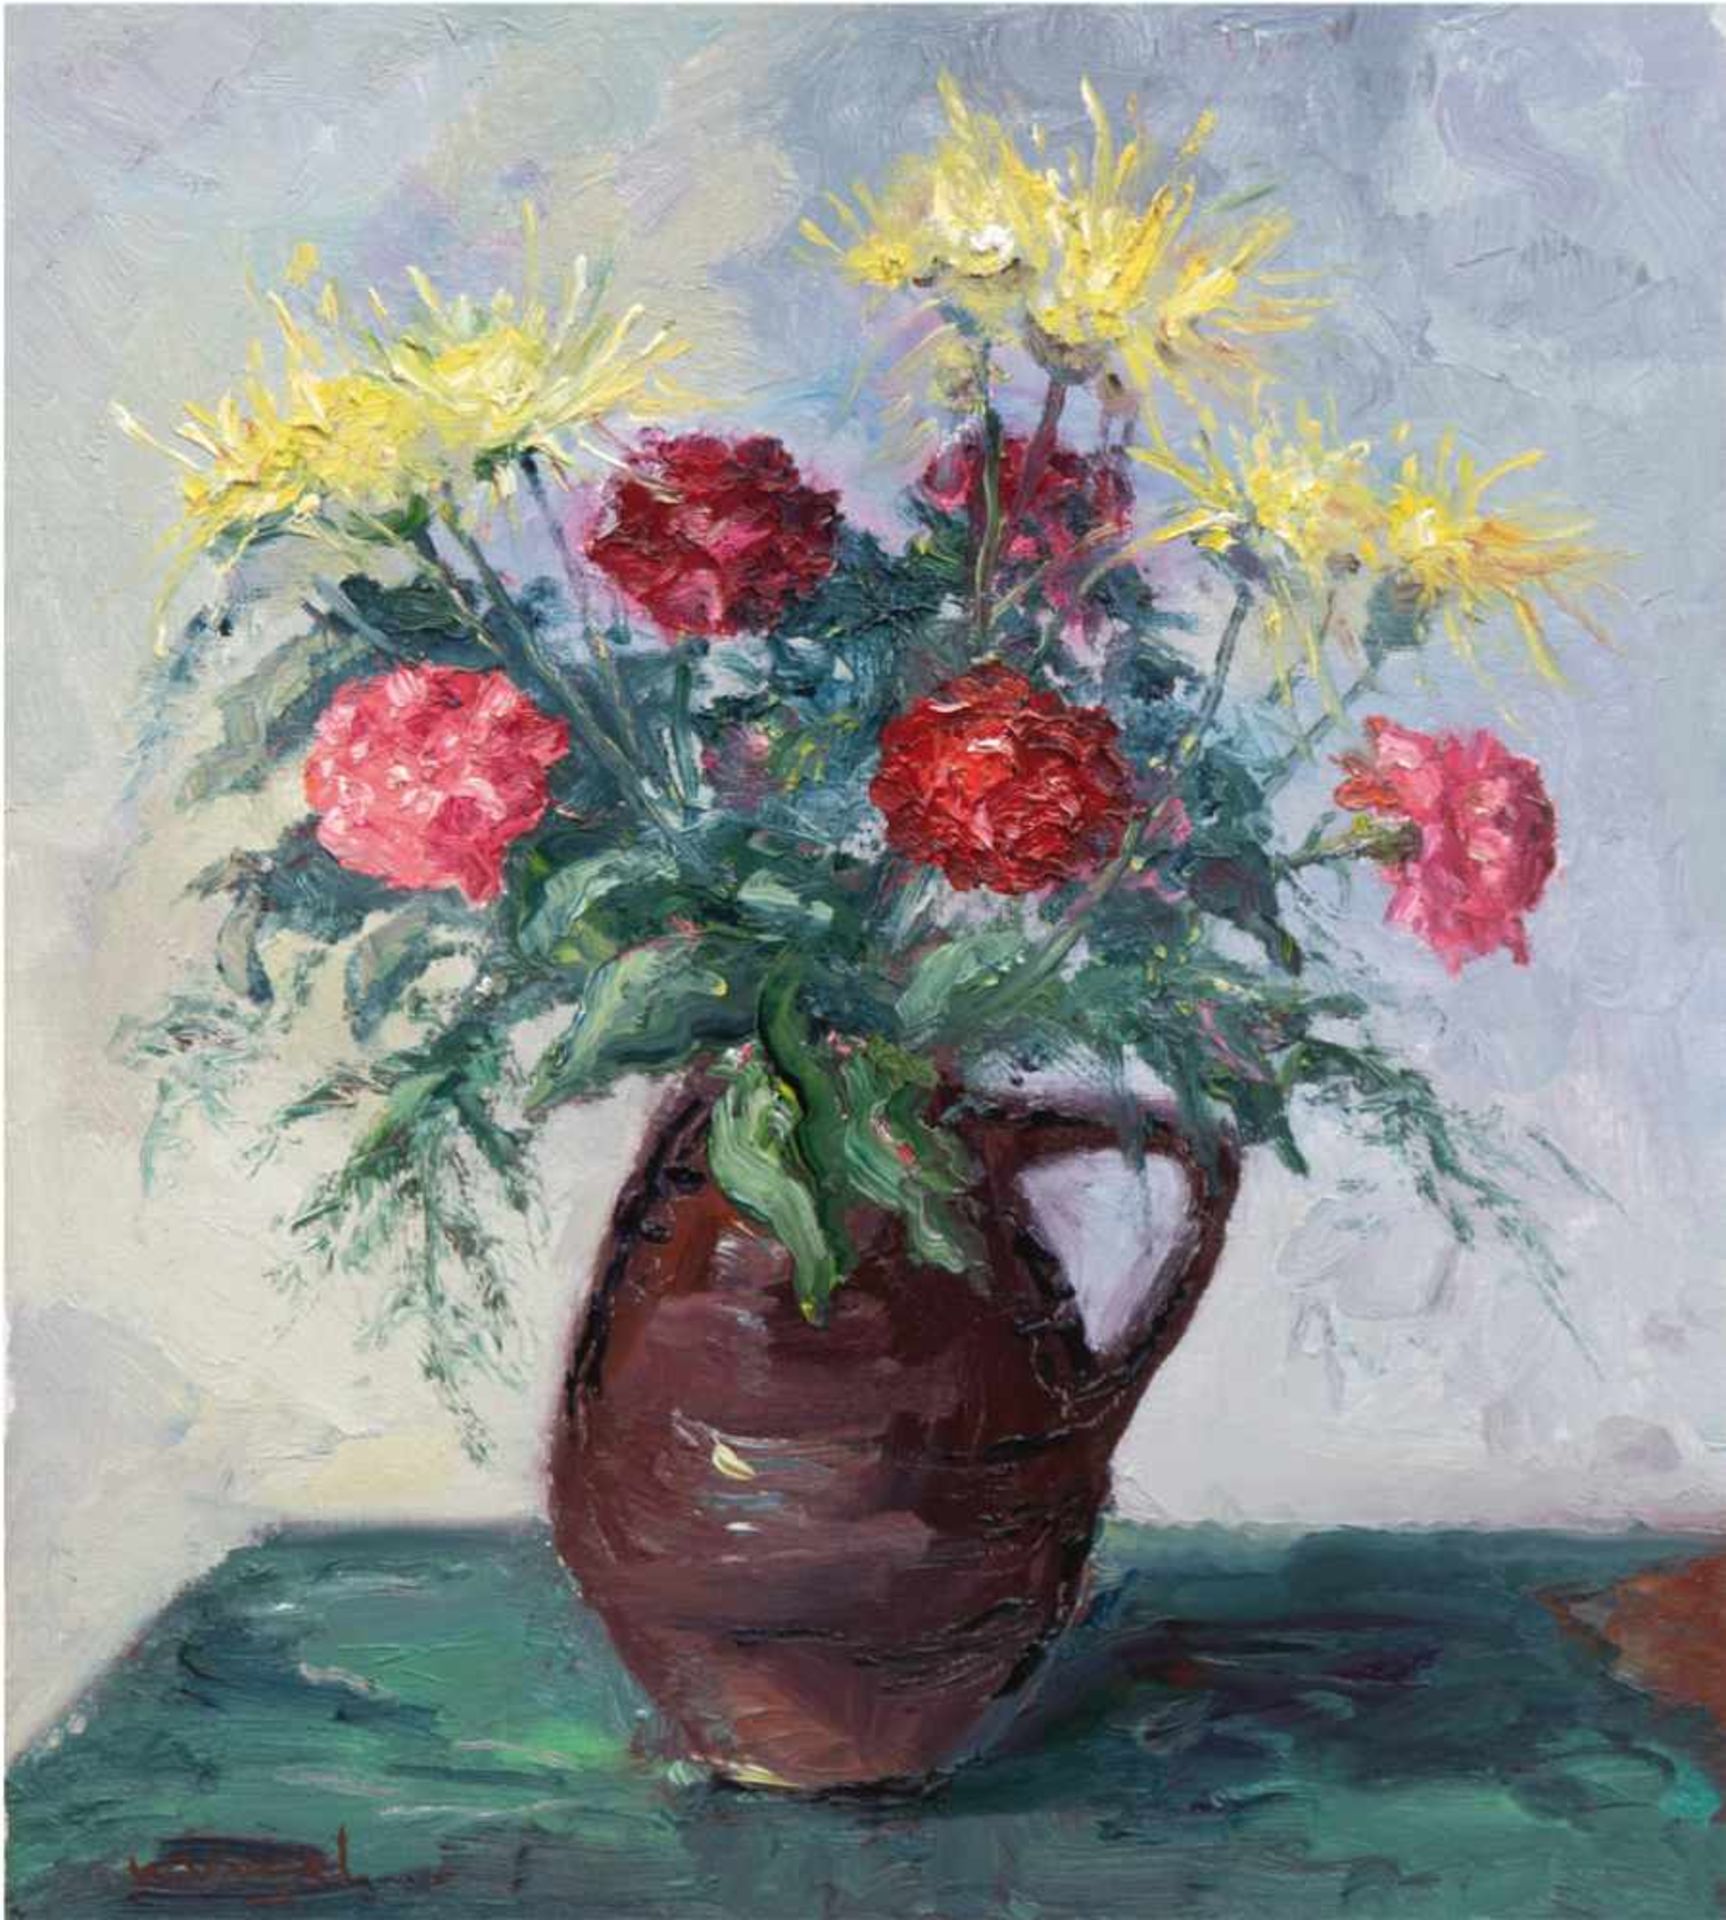 Vogel, Willy (1910-1987) "Blumen im Krug", Öl/Lw., sign. u.l., 60x50 cm